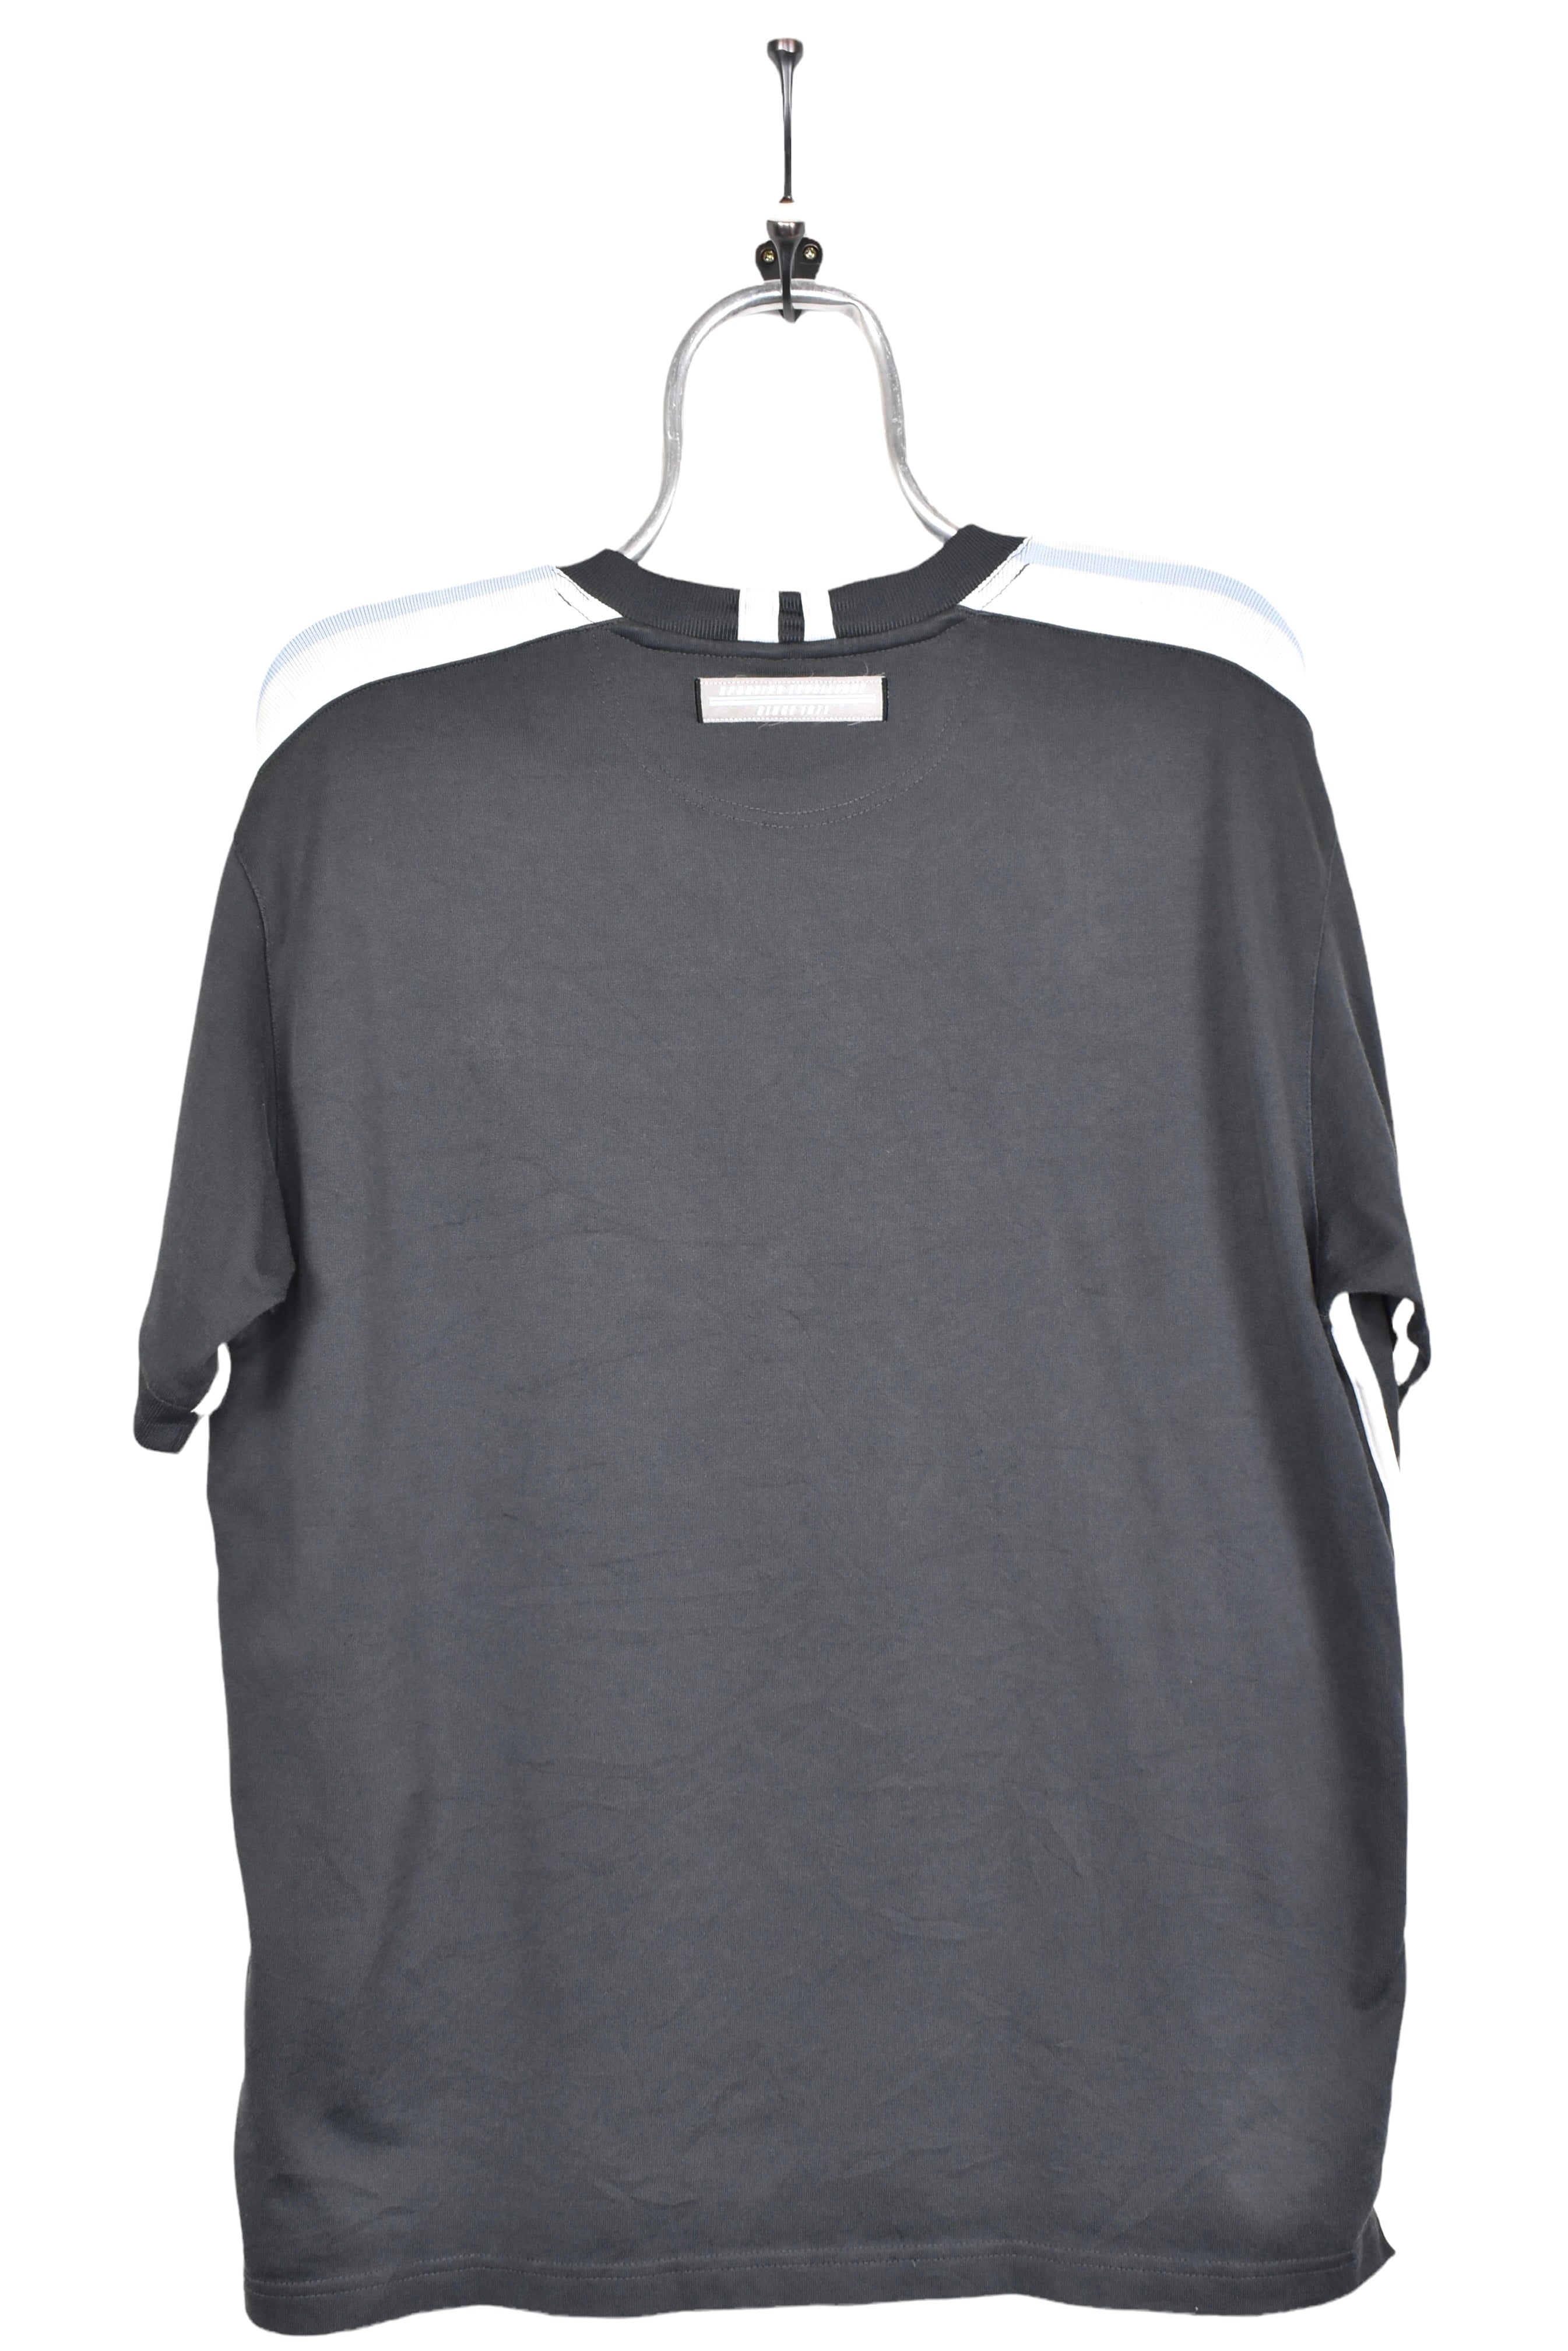 Vintage Nike shirt, grey athletic embroidered tee - AU L NIKE